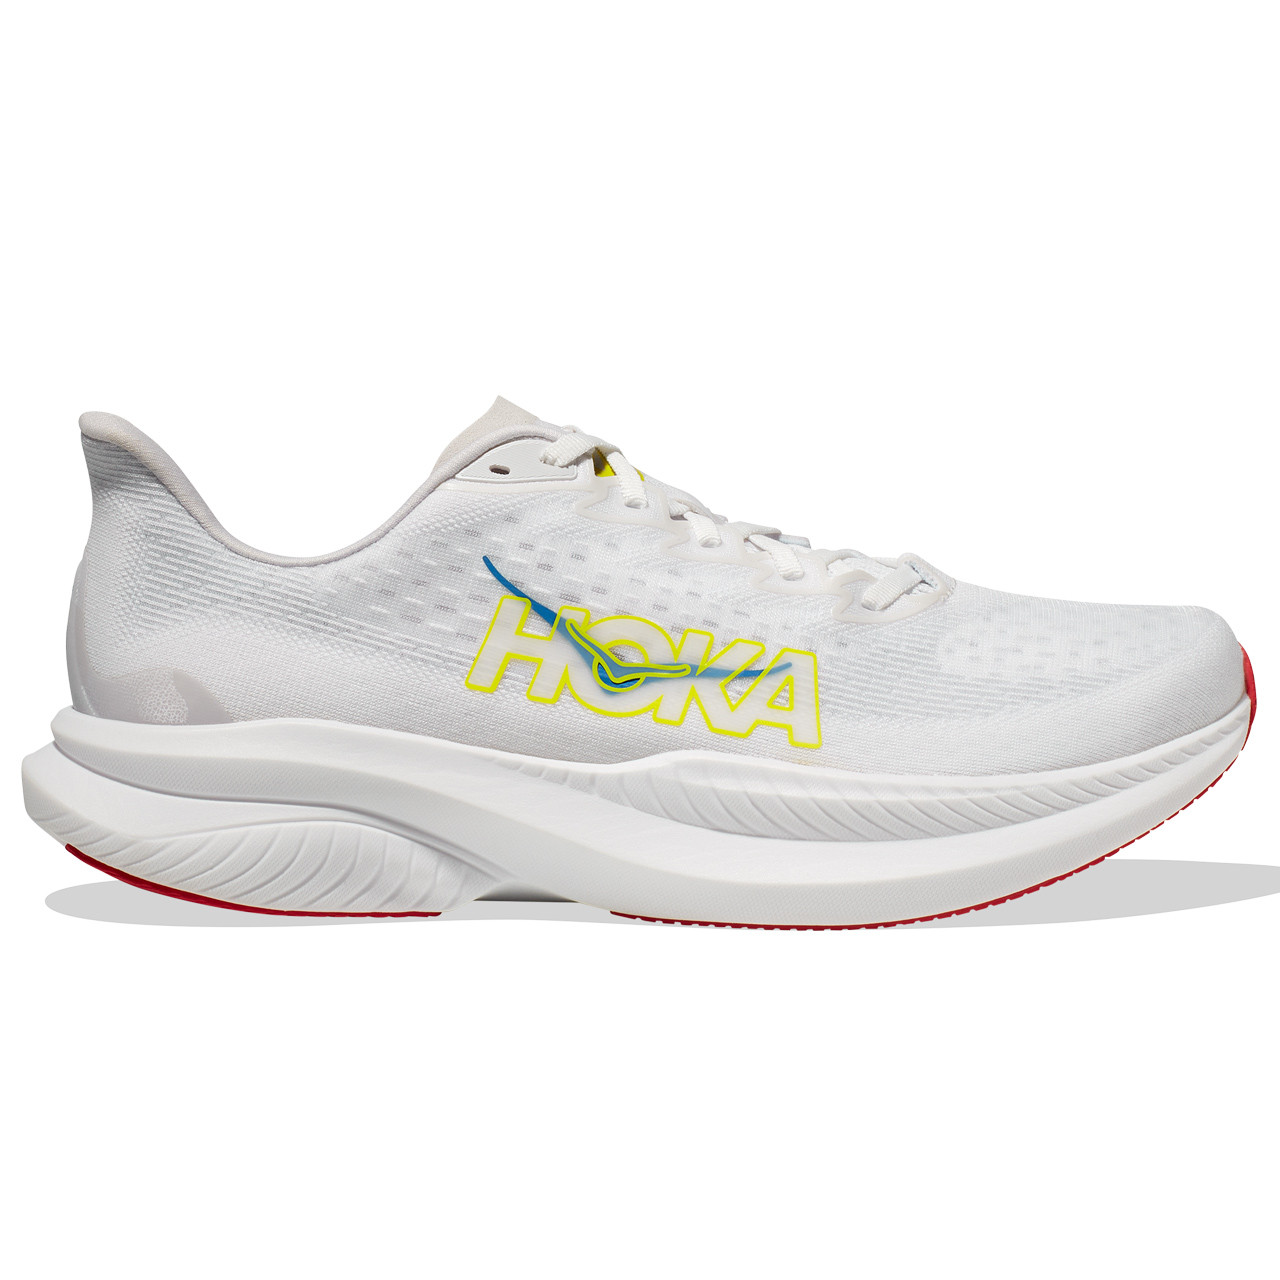 Hoka One One Men's Mach 4 Running Shoes (White/Fiesta, Size 13 US)